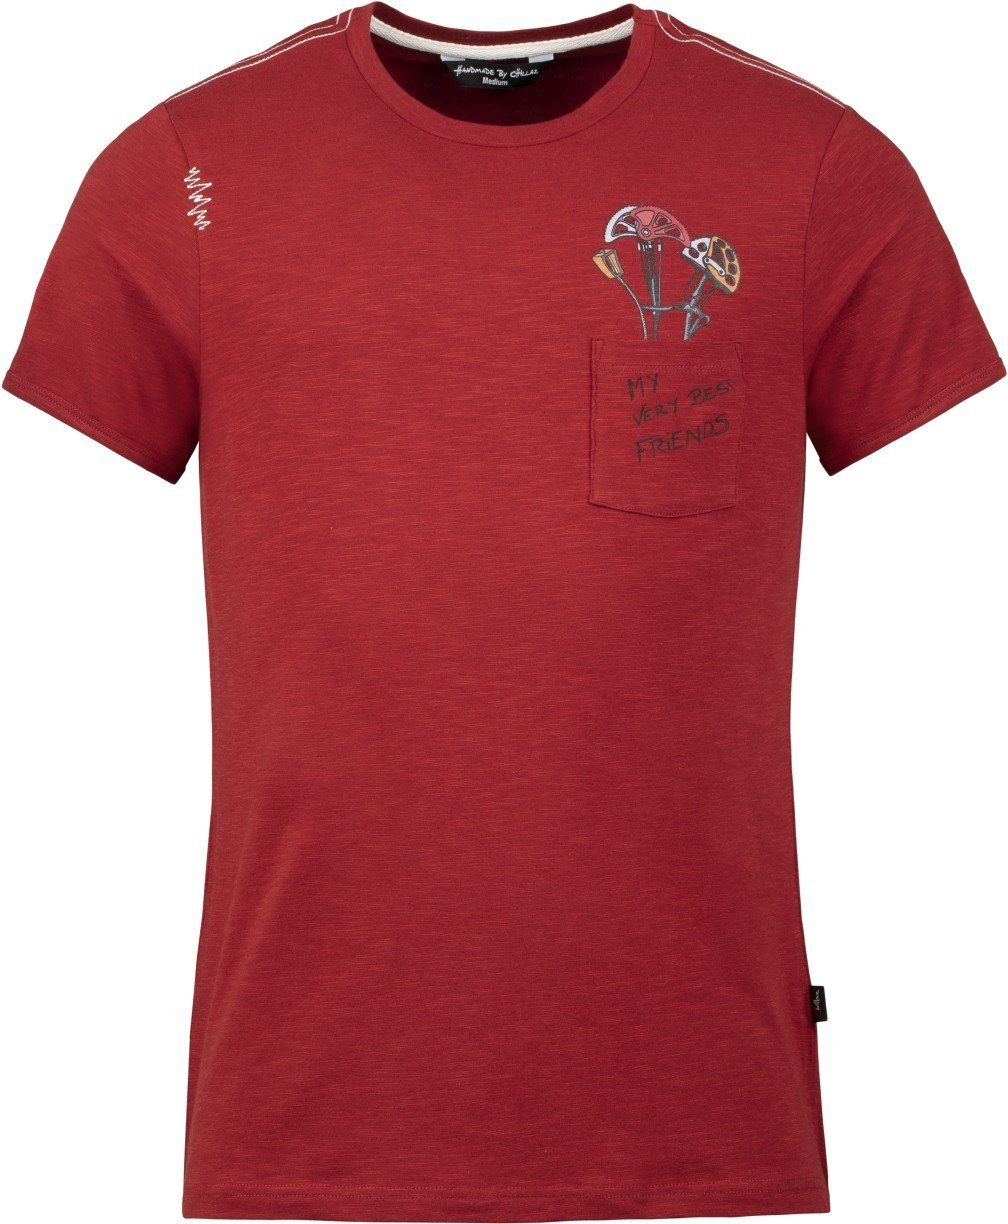 Chillaz T-Shirt Friends red T-Shirt dark Pocket